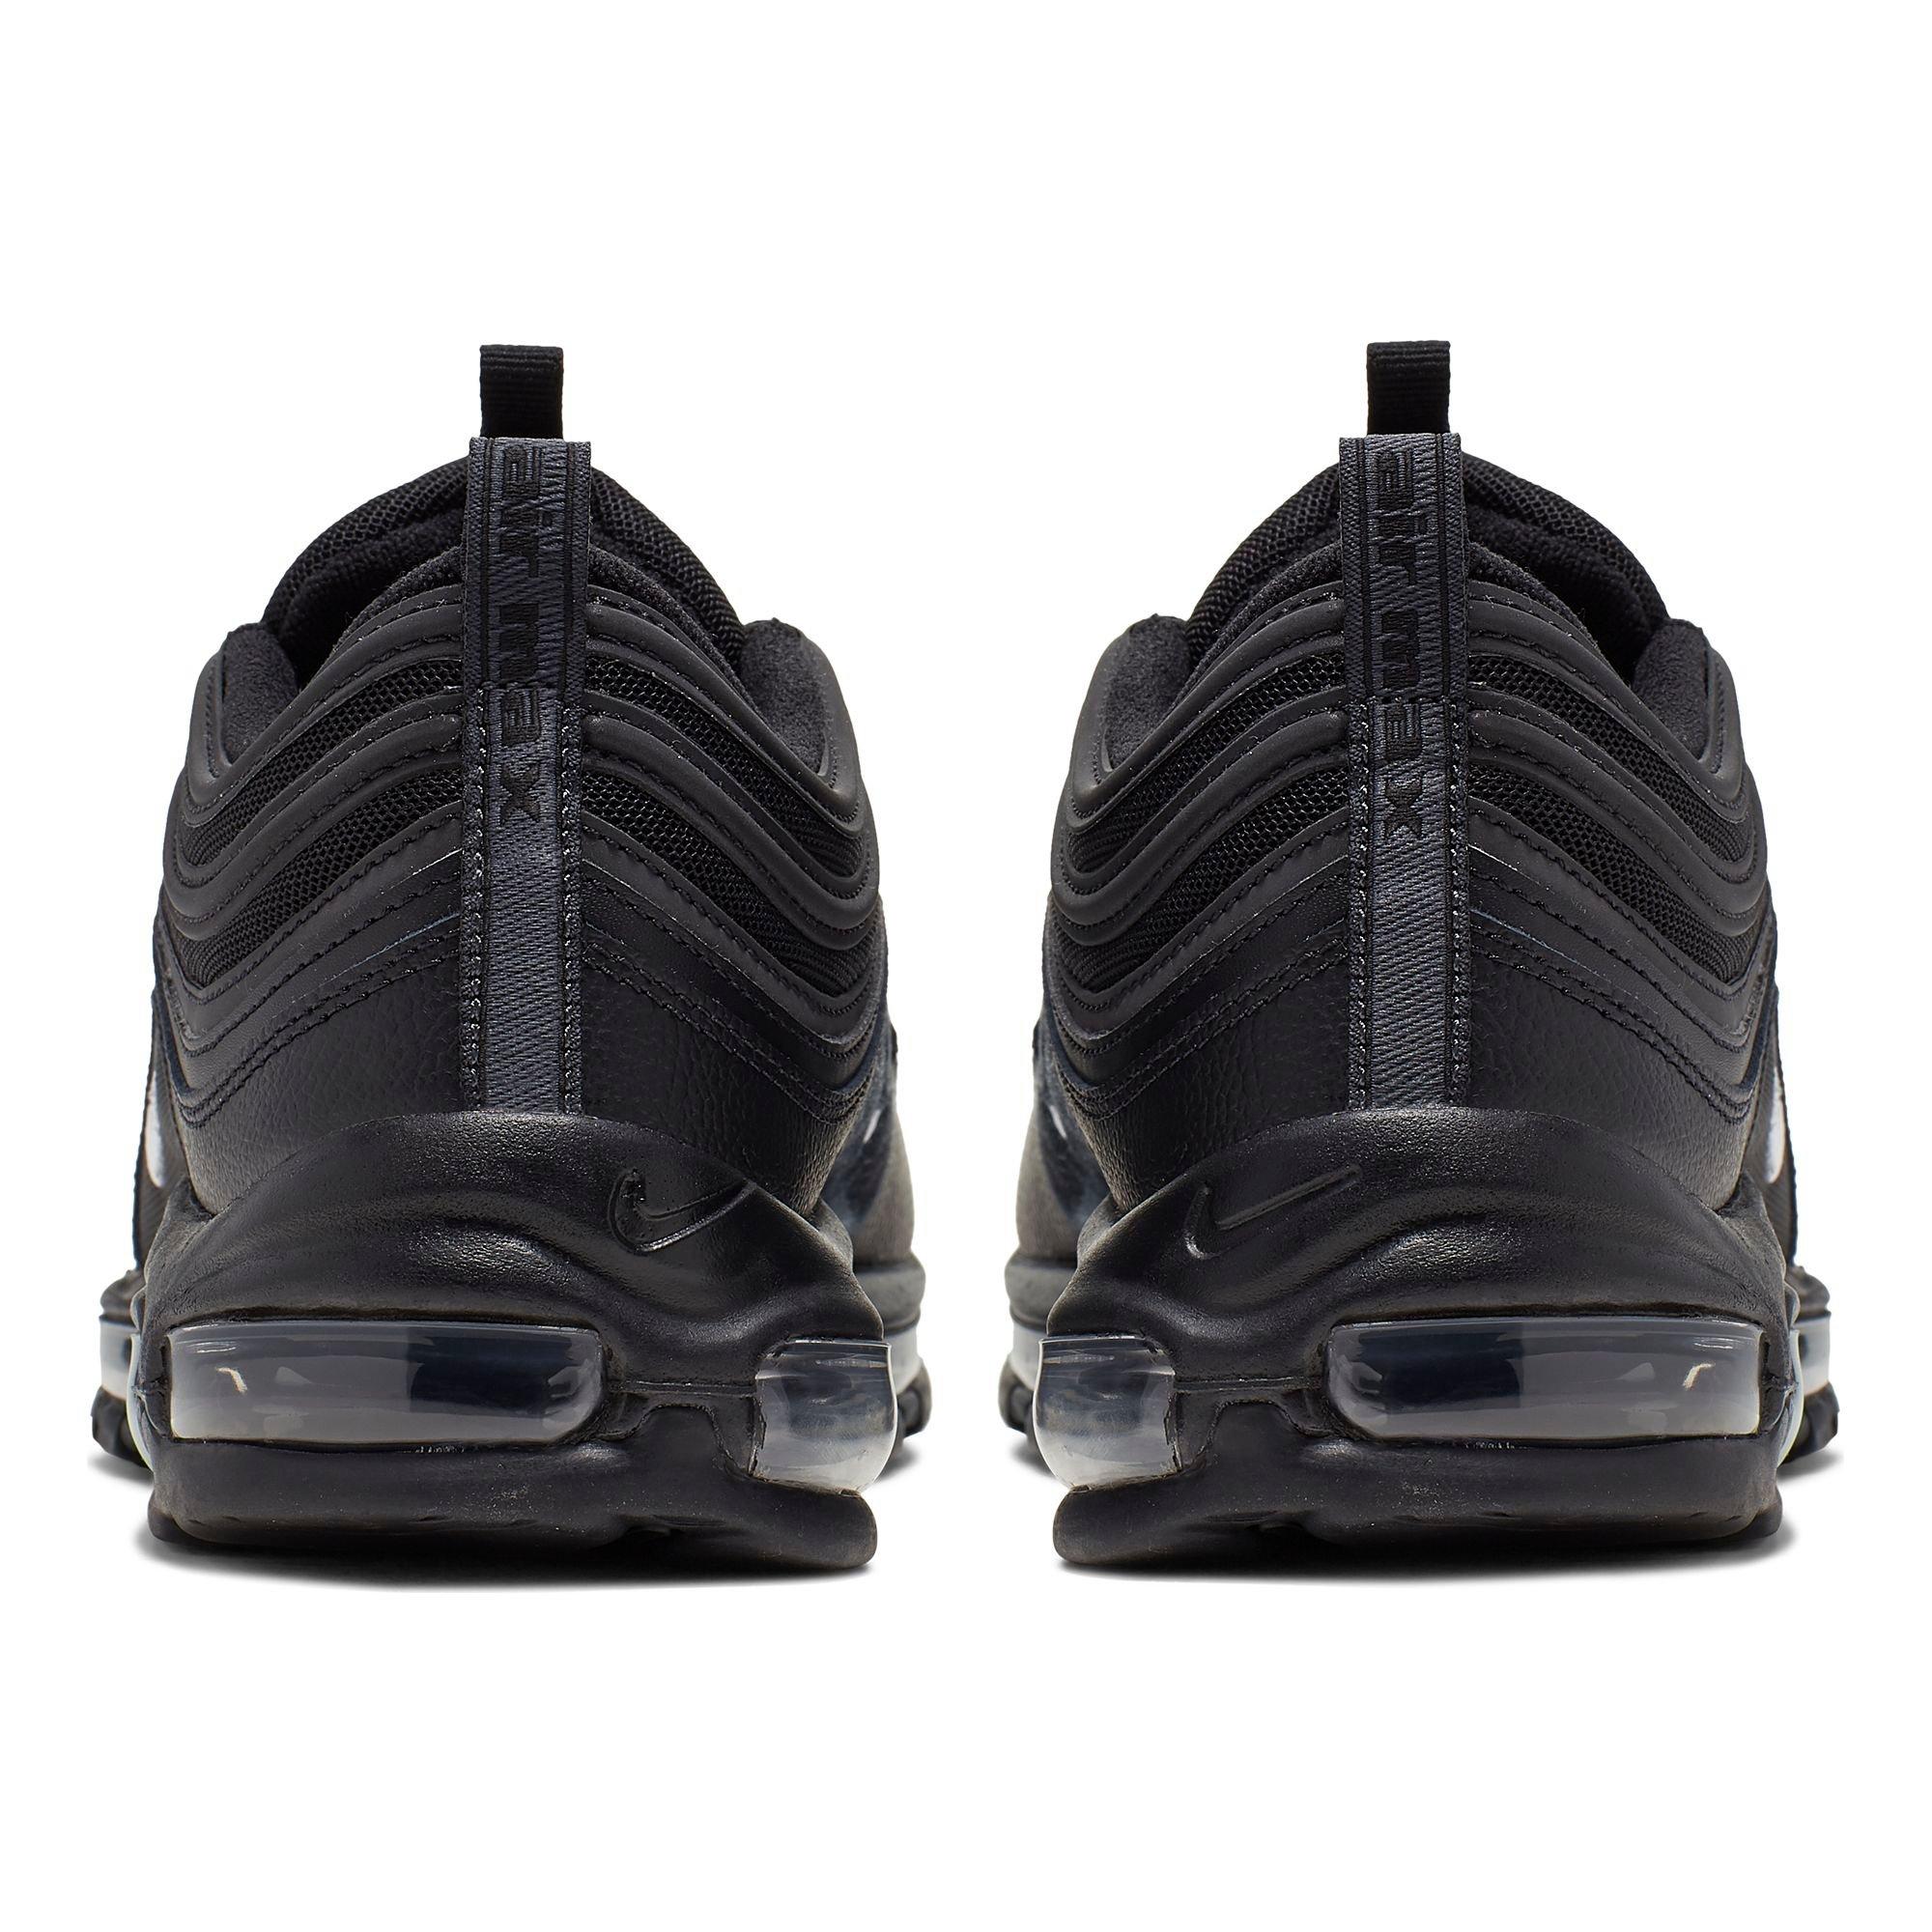 avance salir Influencia Nike Air Max 97 "Black/Anthracite" Men's Shoe